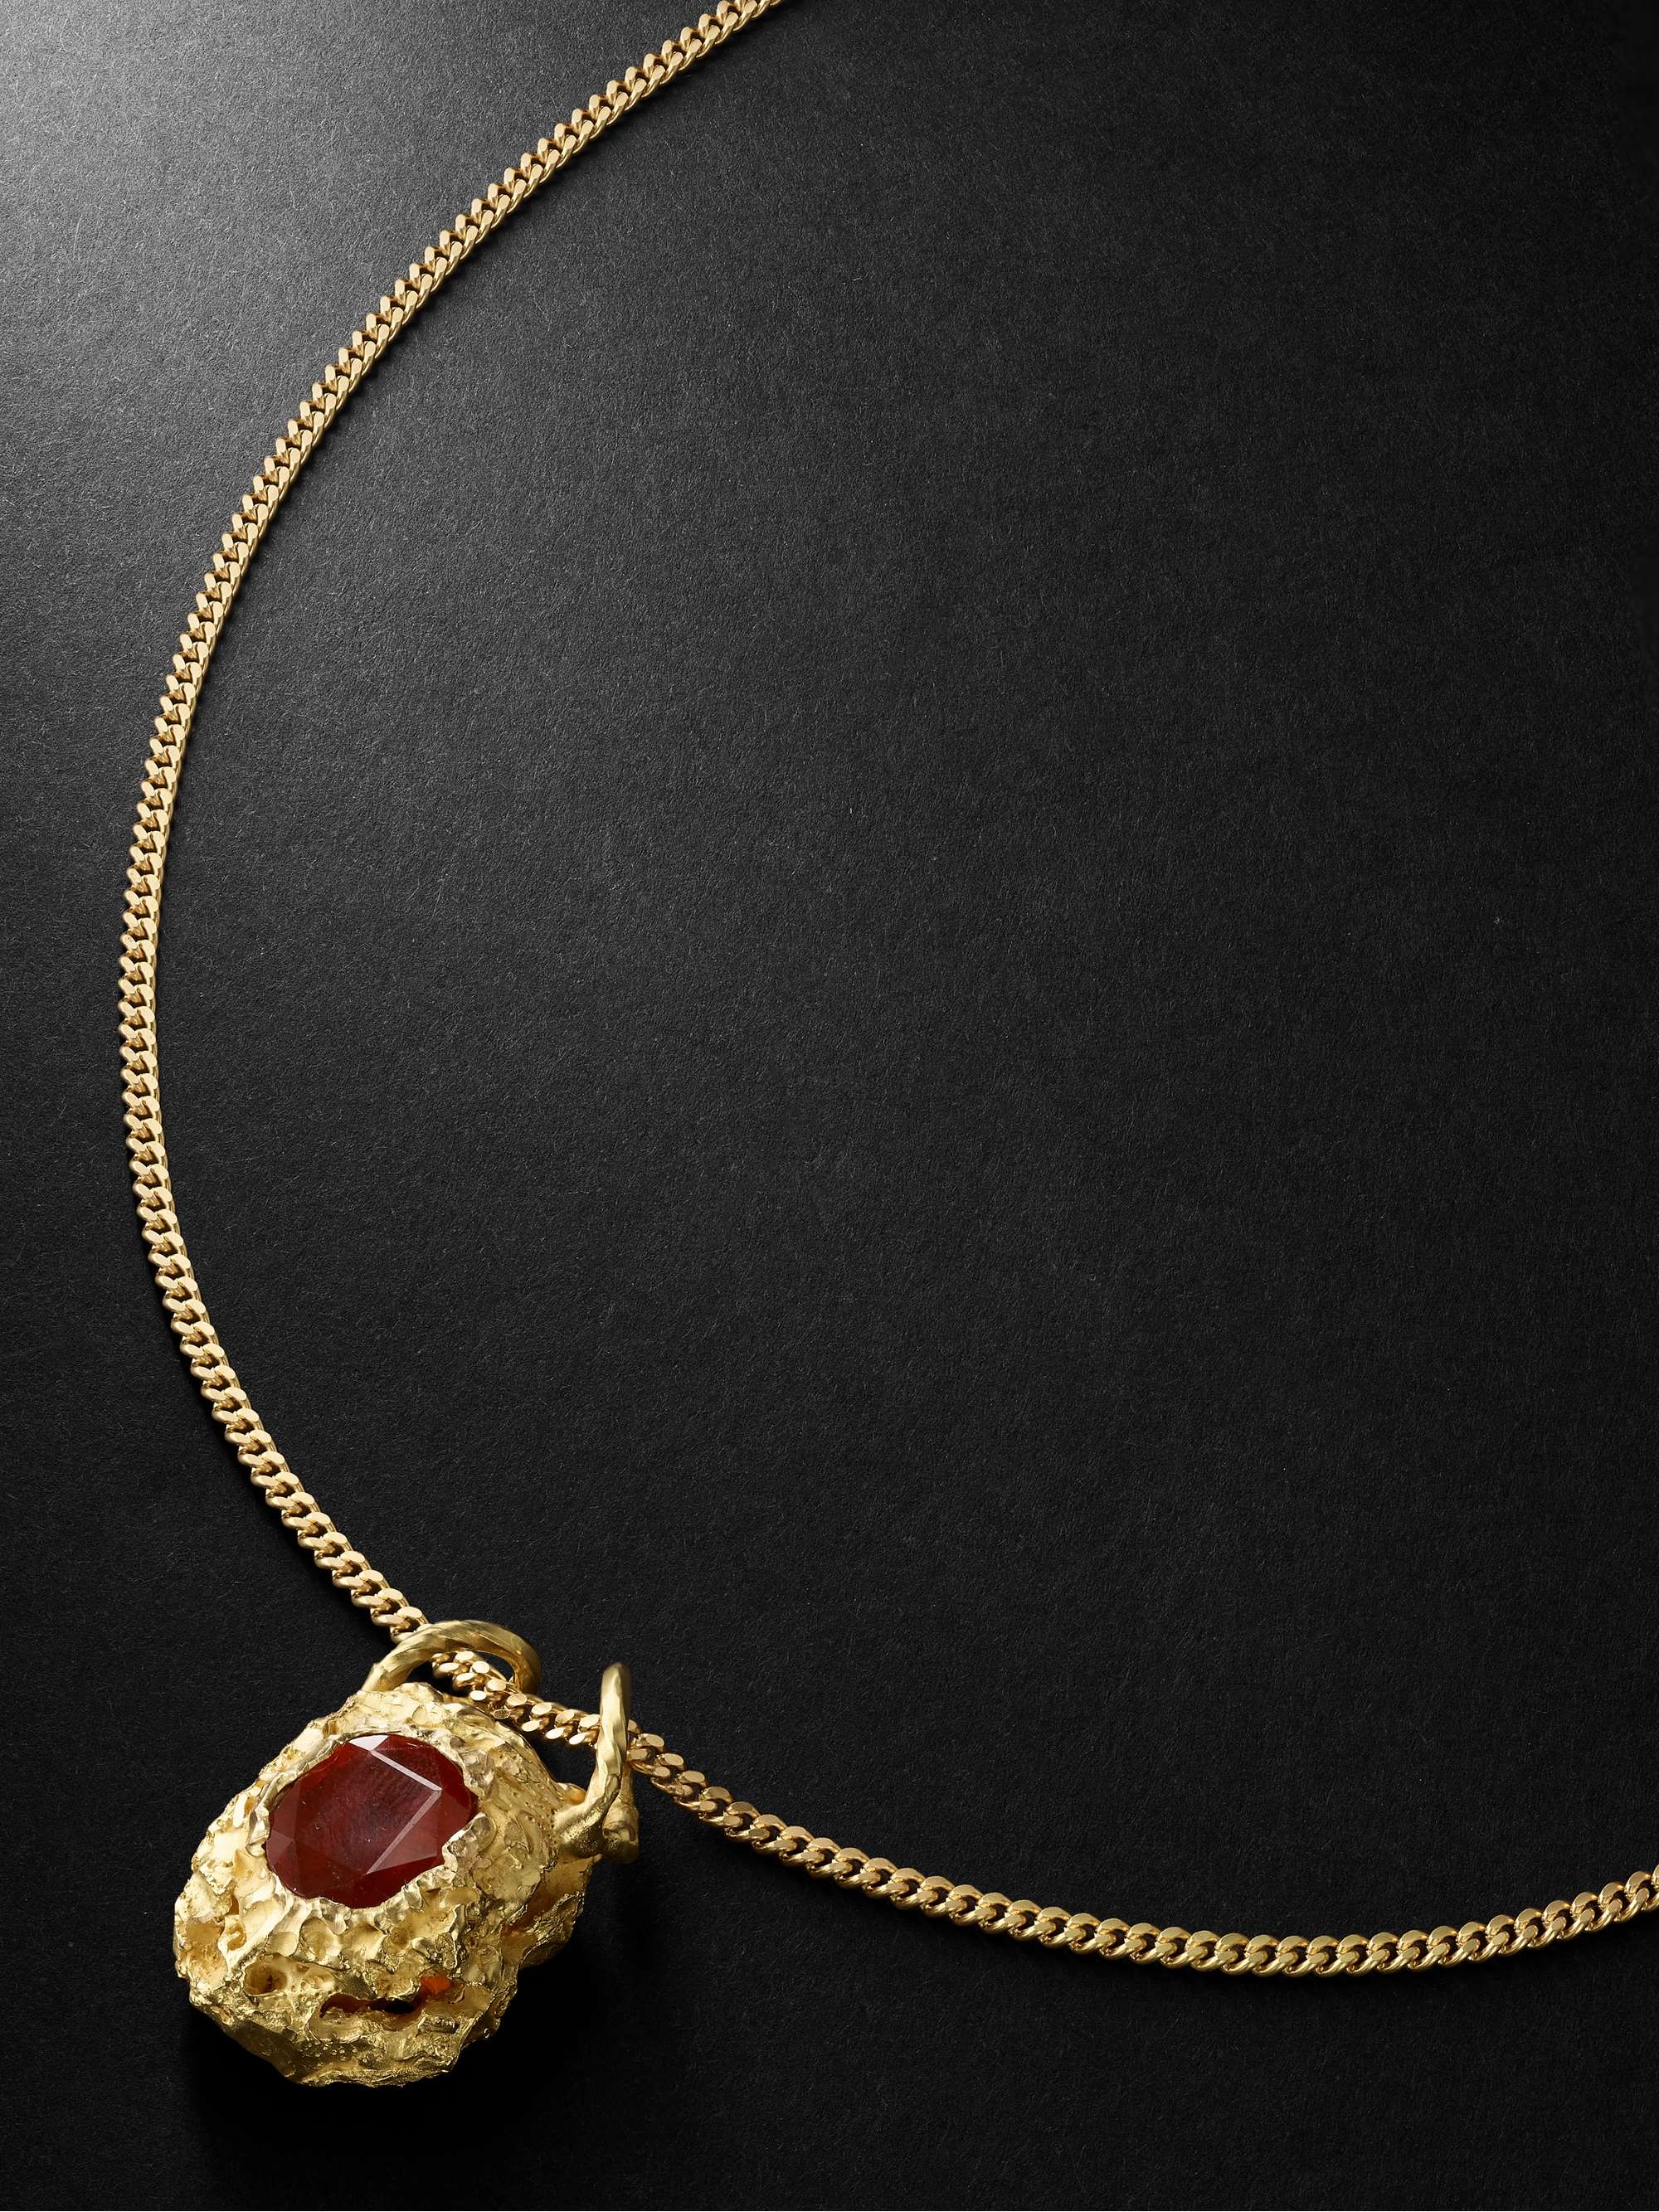 ELHANATI The Lunar Gold Hessonite Necklace